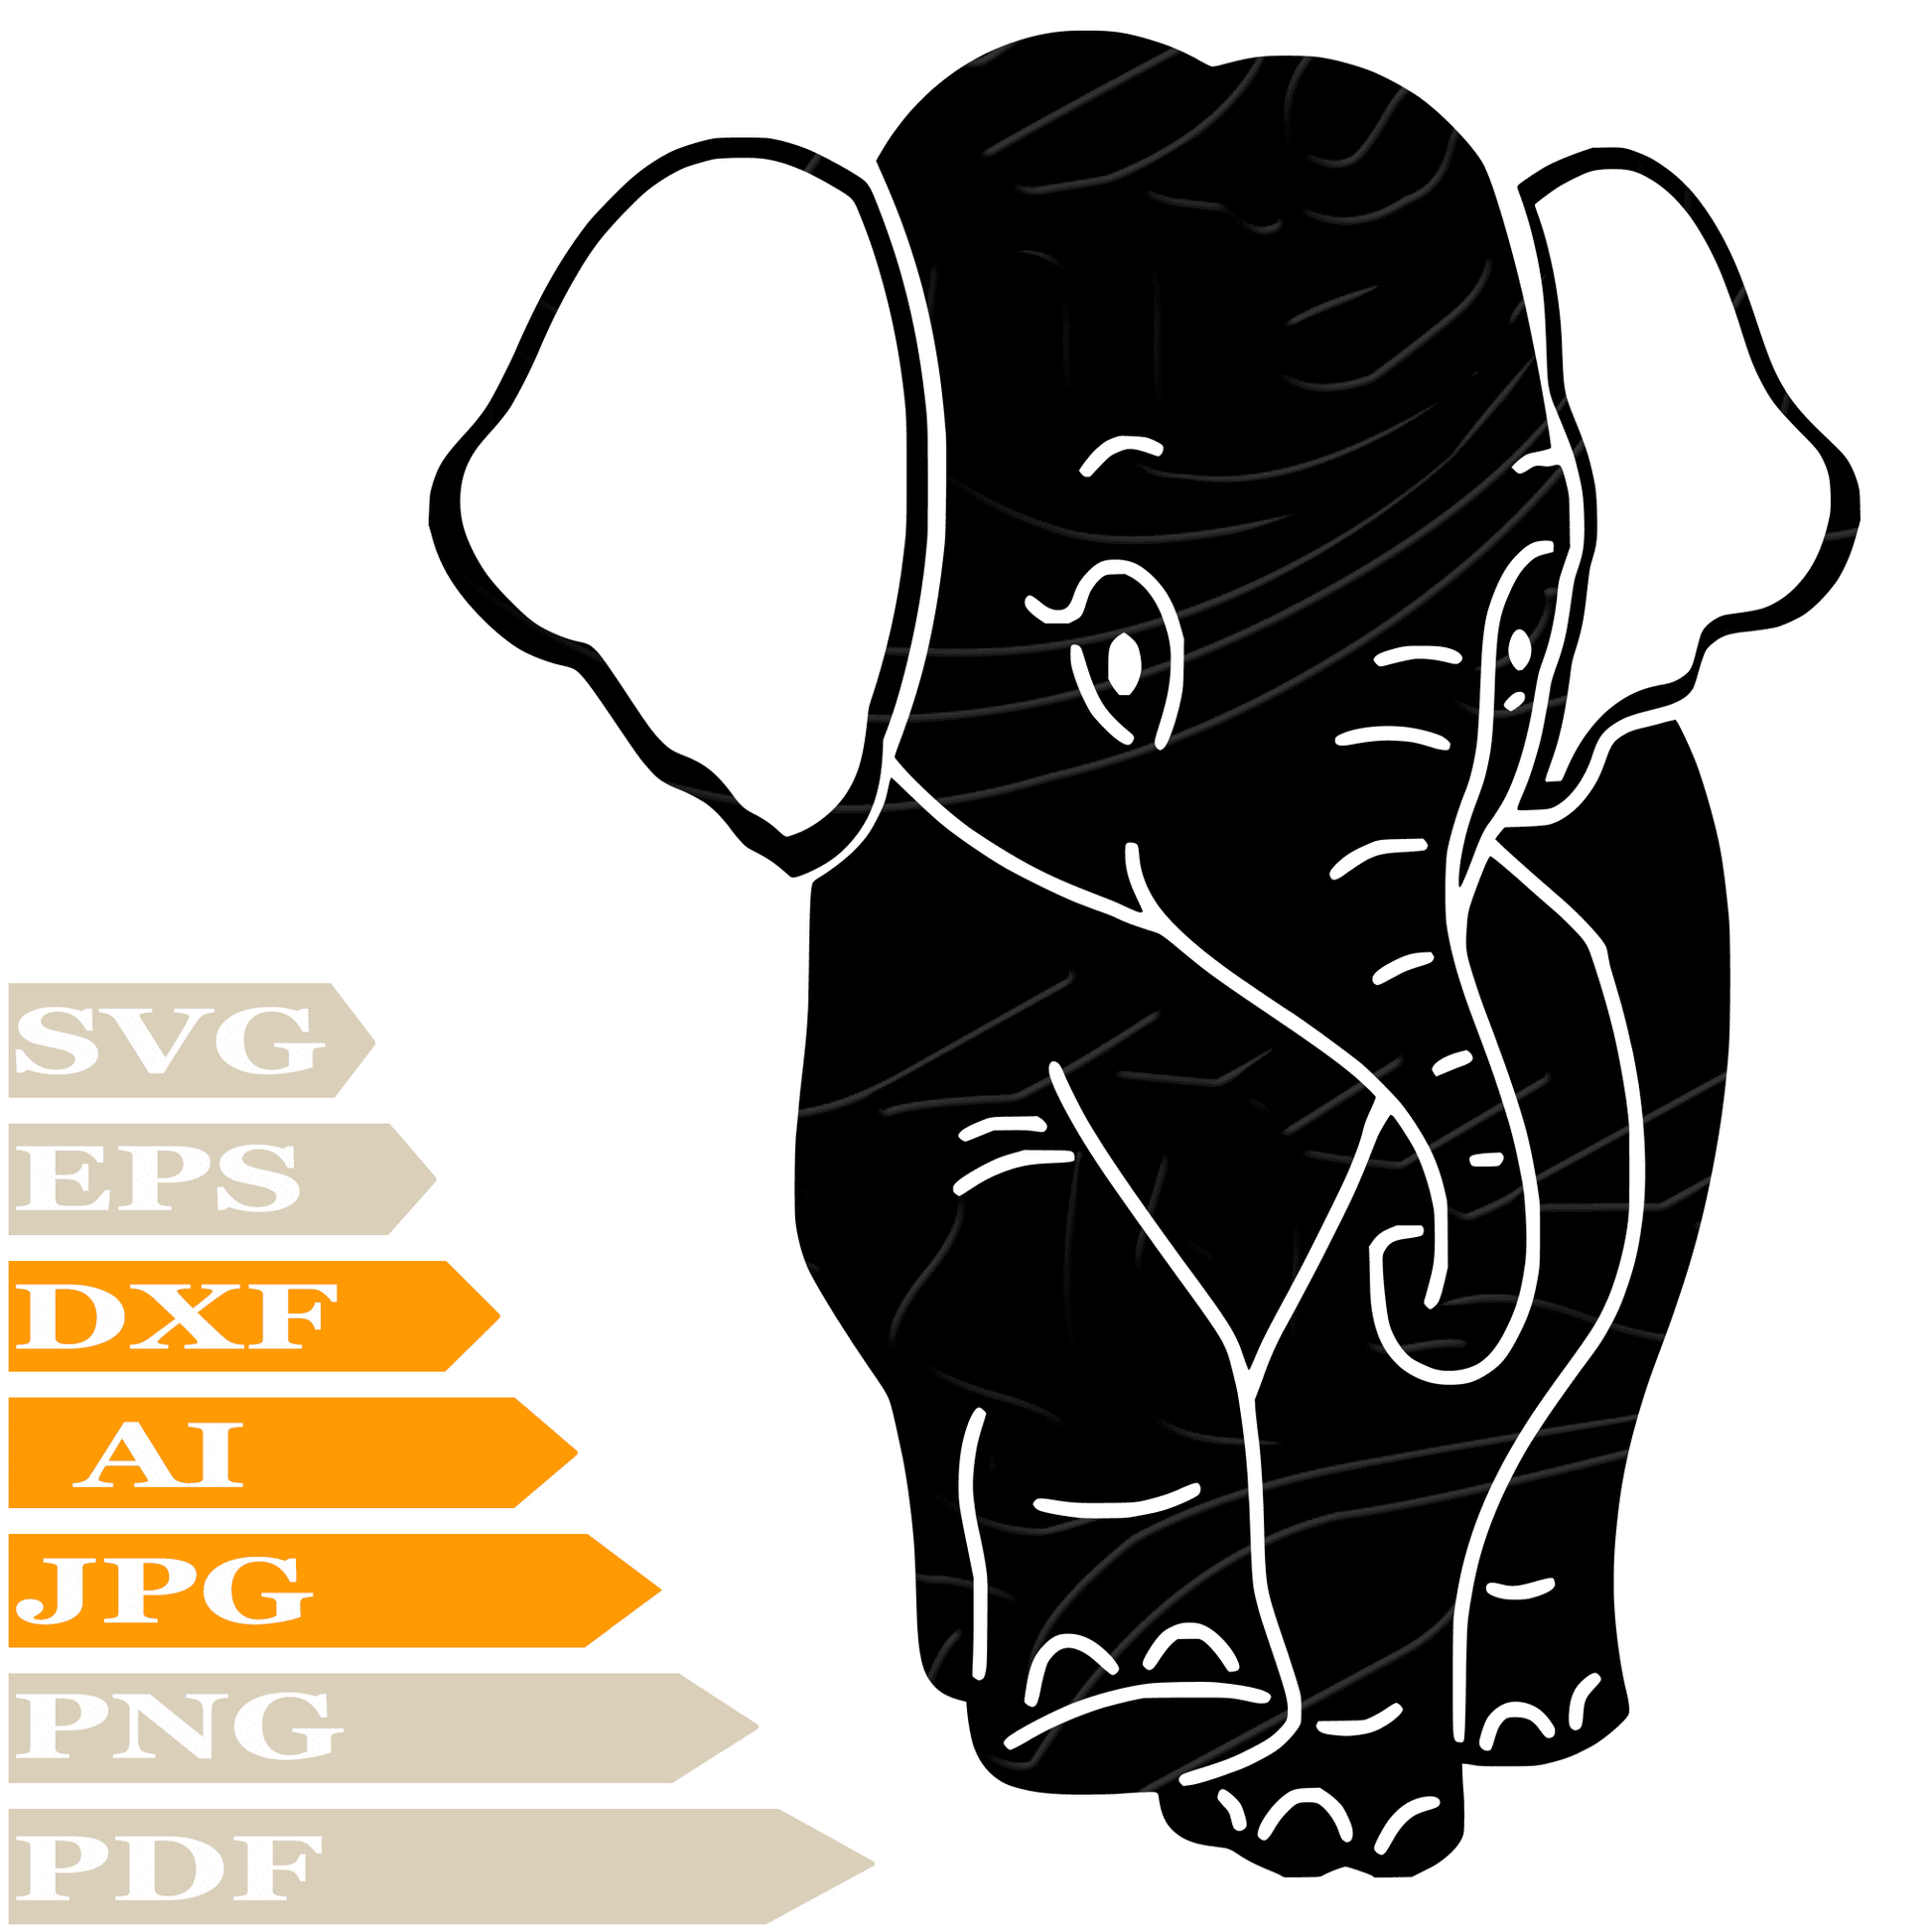 Sofvintage-Elephant SVG-Cute Elephant SVG Design-Funny Elephant SVG File-Elephant Digital Vector Download-Cute Elephant PNG-Funny Elephant For Cricut-Elephant Clip art-Cute Elephant-Cut File-Elephant T-Shirt-Elephant Wall Sticker-Elephant For Tattoo-Funy Elephant Printable-Cute Elephant Silhouette